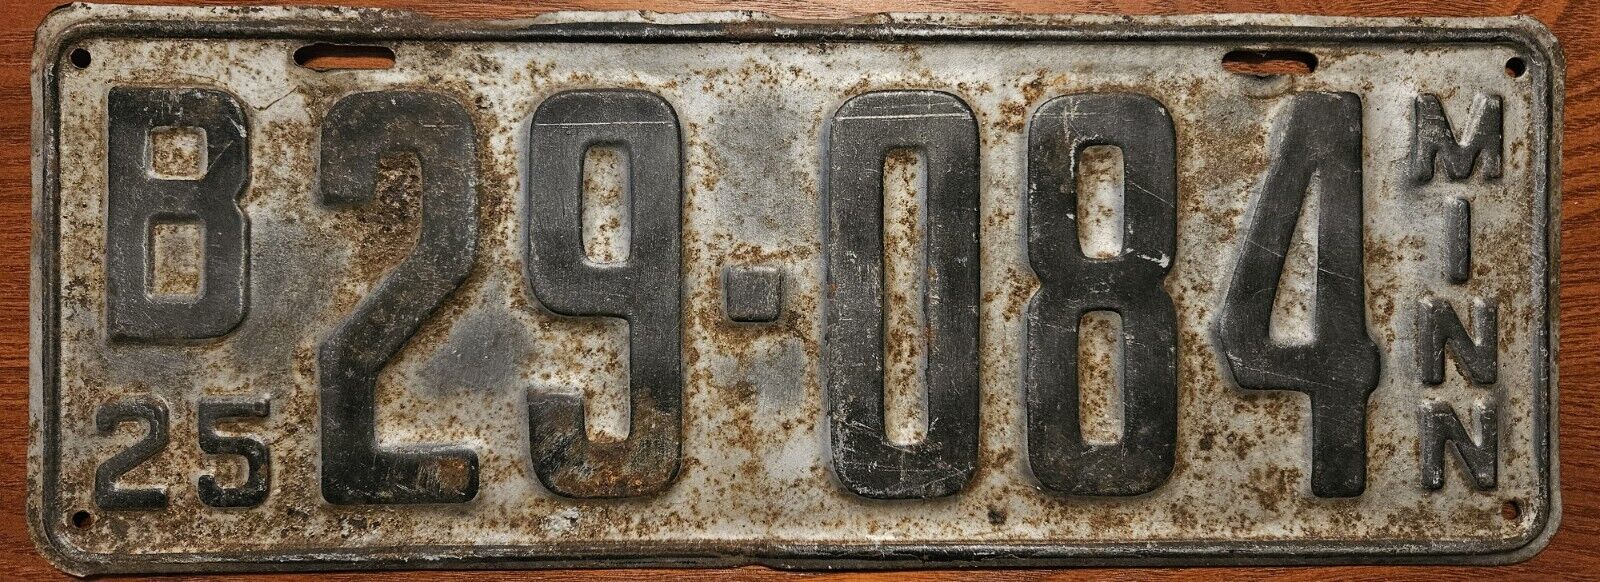 1925 Minnesota License Plate B29-084